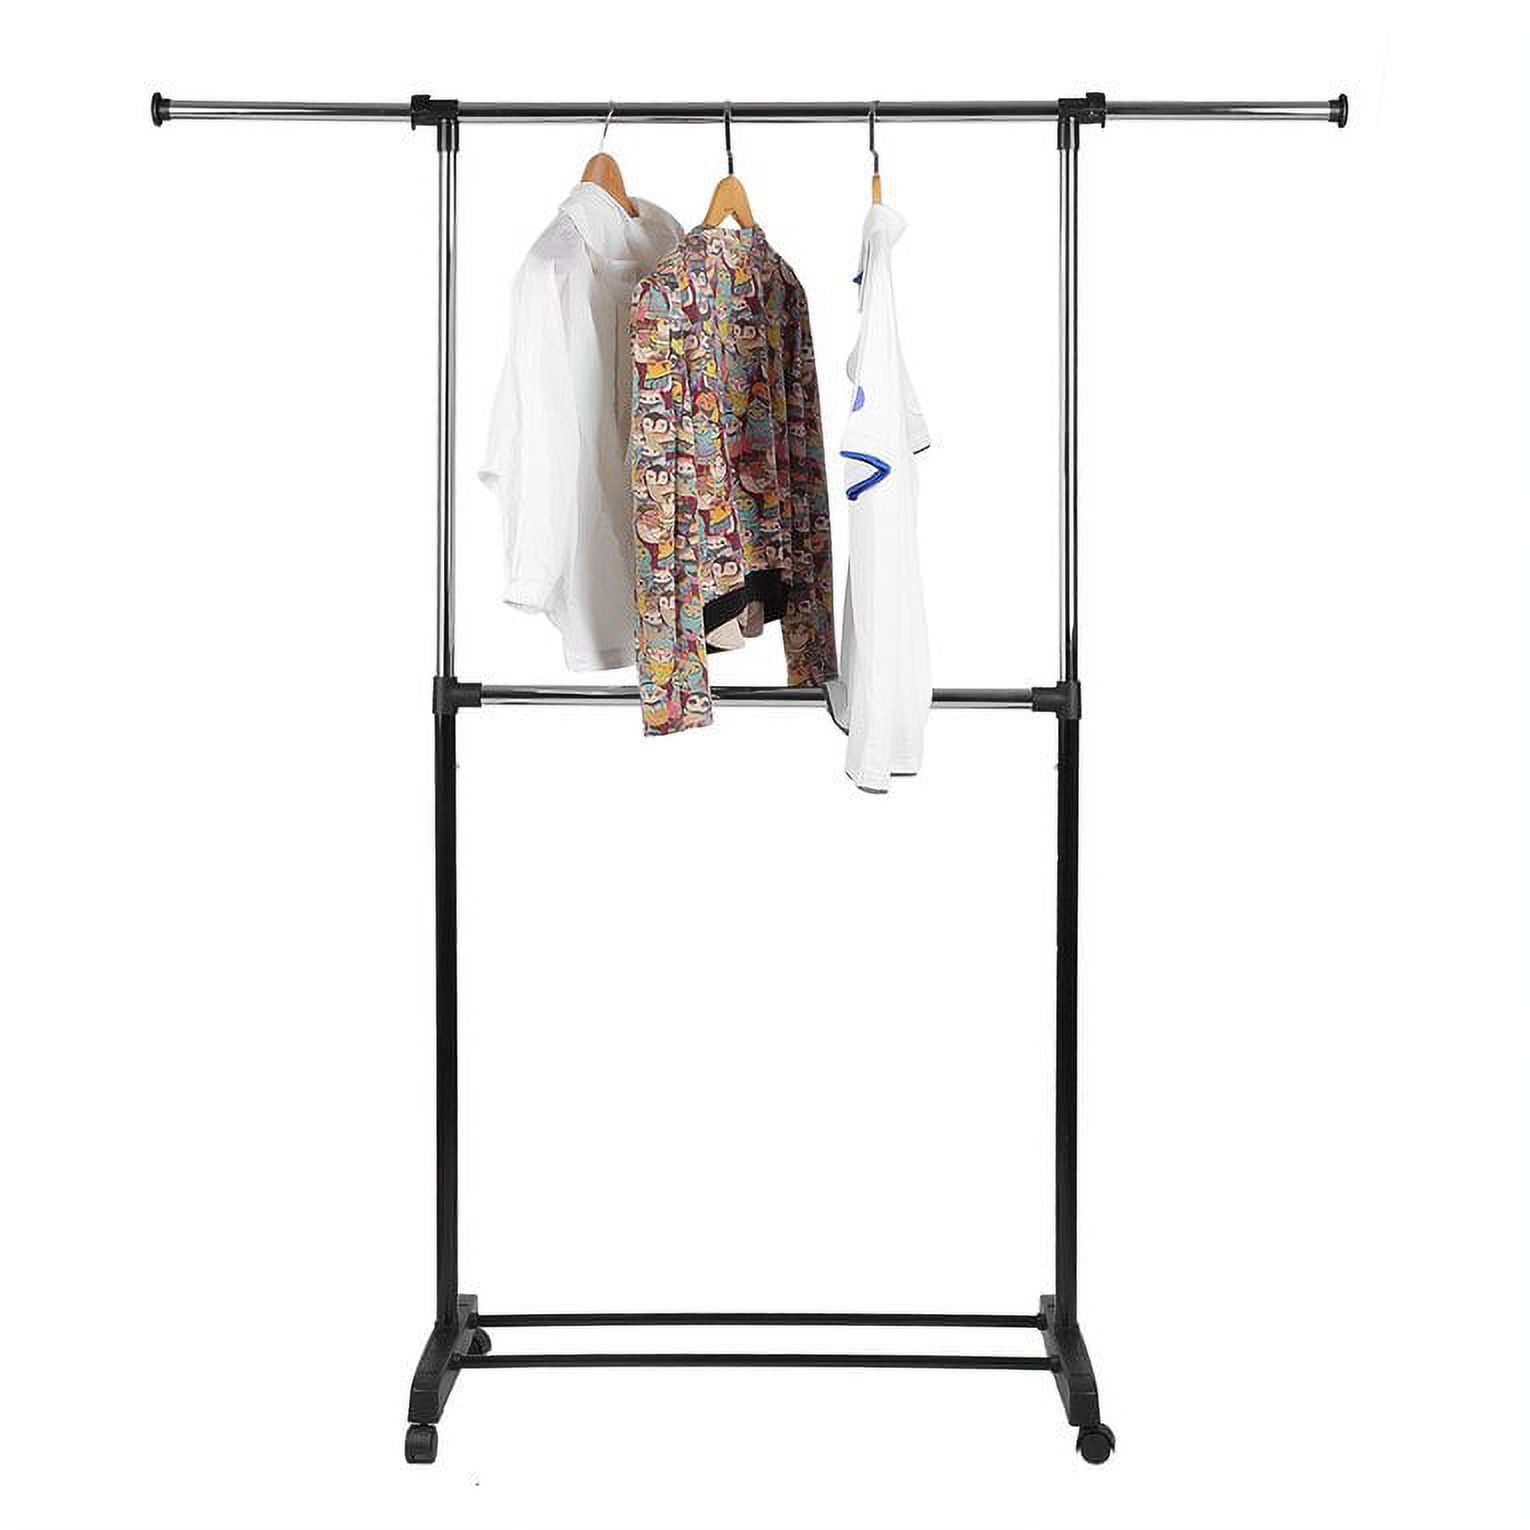 Mainstays Adjustable 2-Tier Rolling Garment Rack, Adjustable Design - image 4 of 7